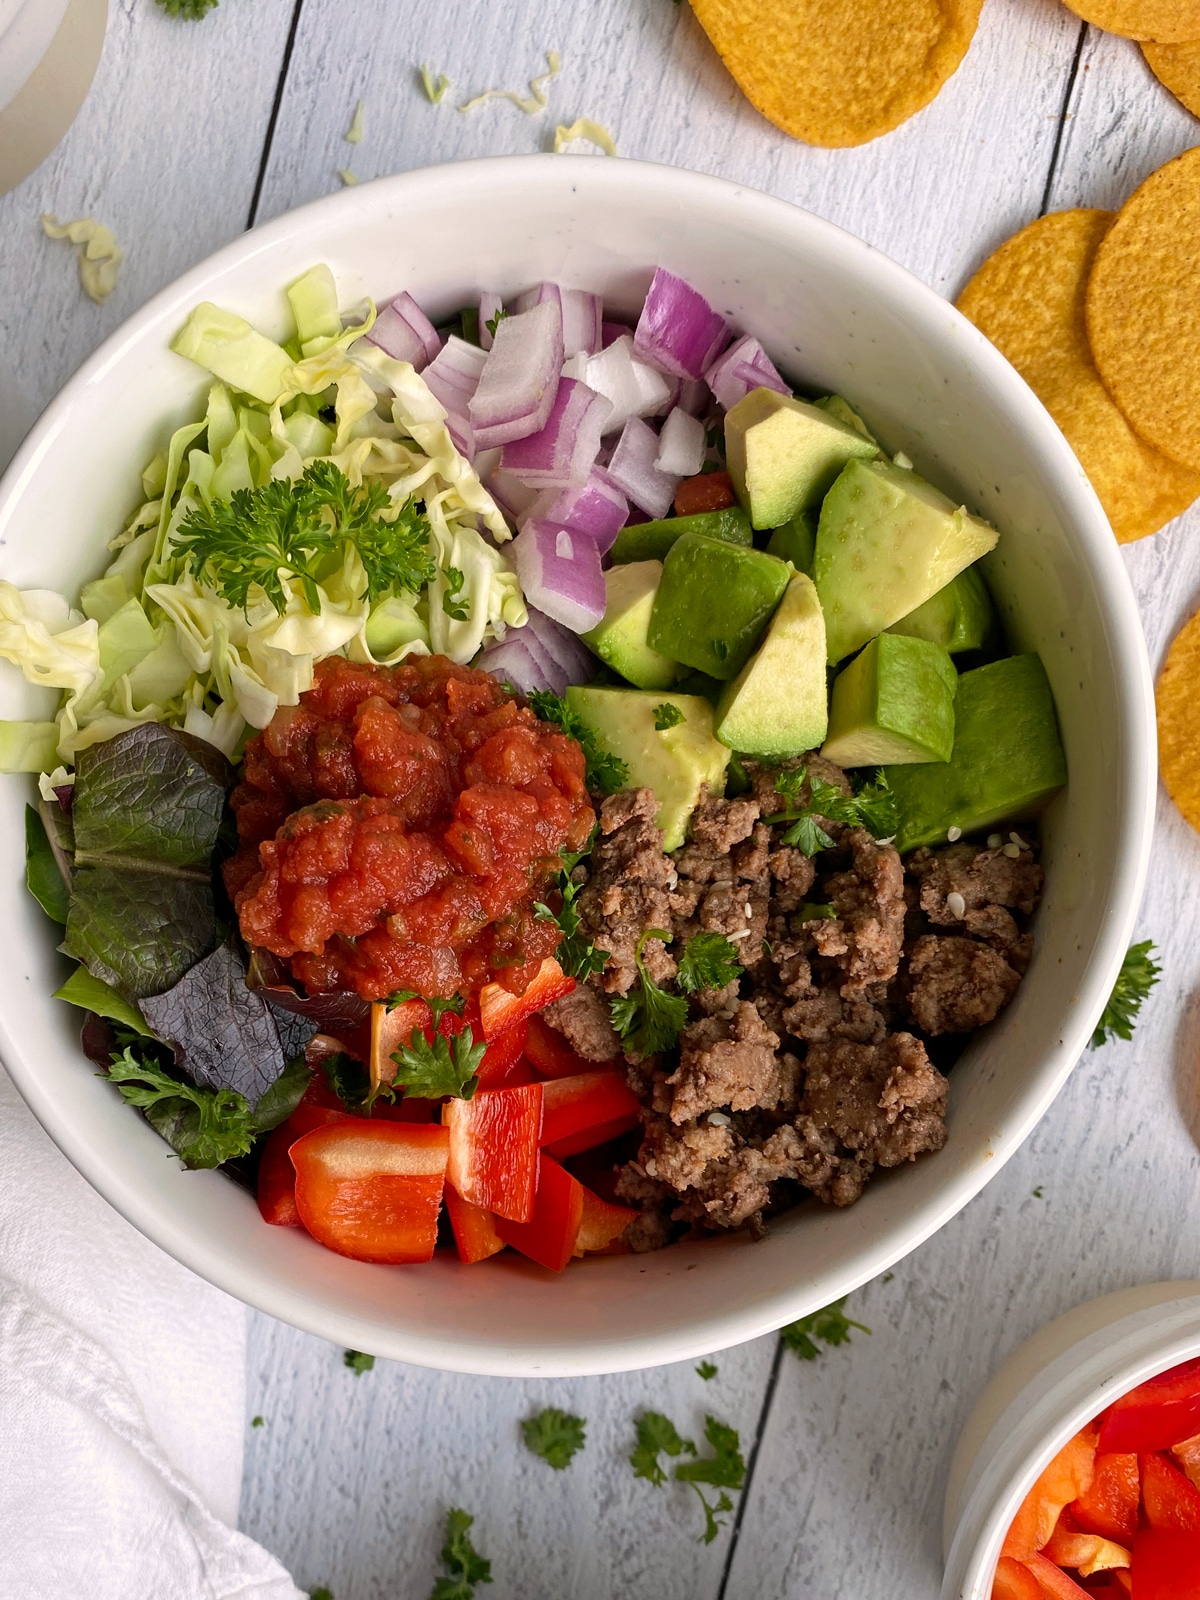 https://bakeitpaleo.com/wp-content/uploads/2021/04/whole30-taco-salad-with-ground-beef.jpg